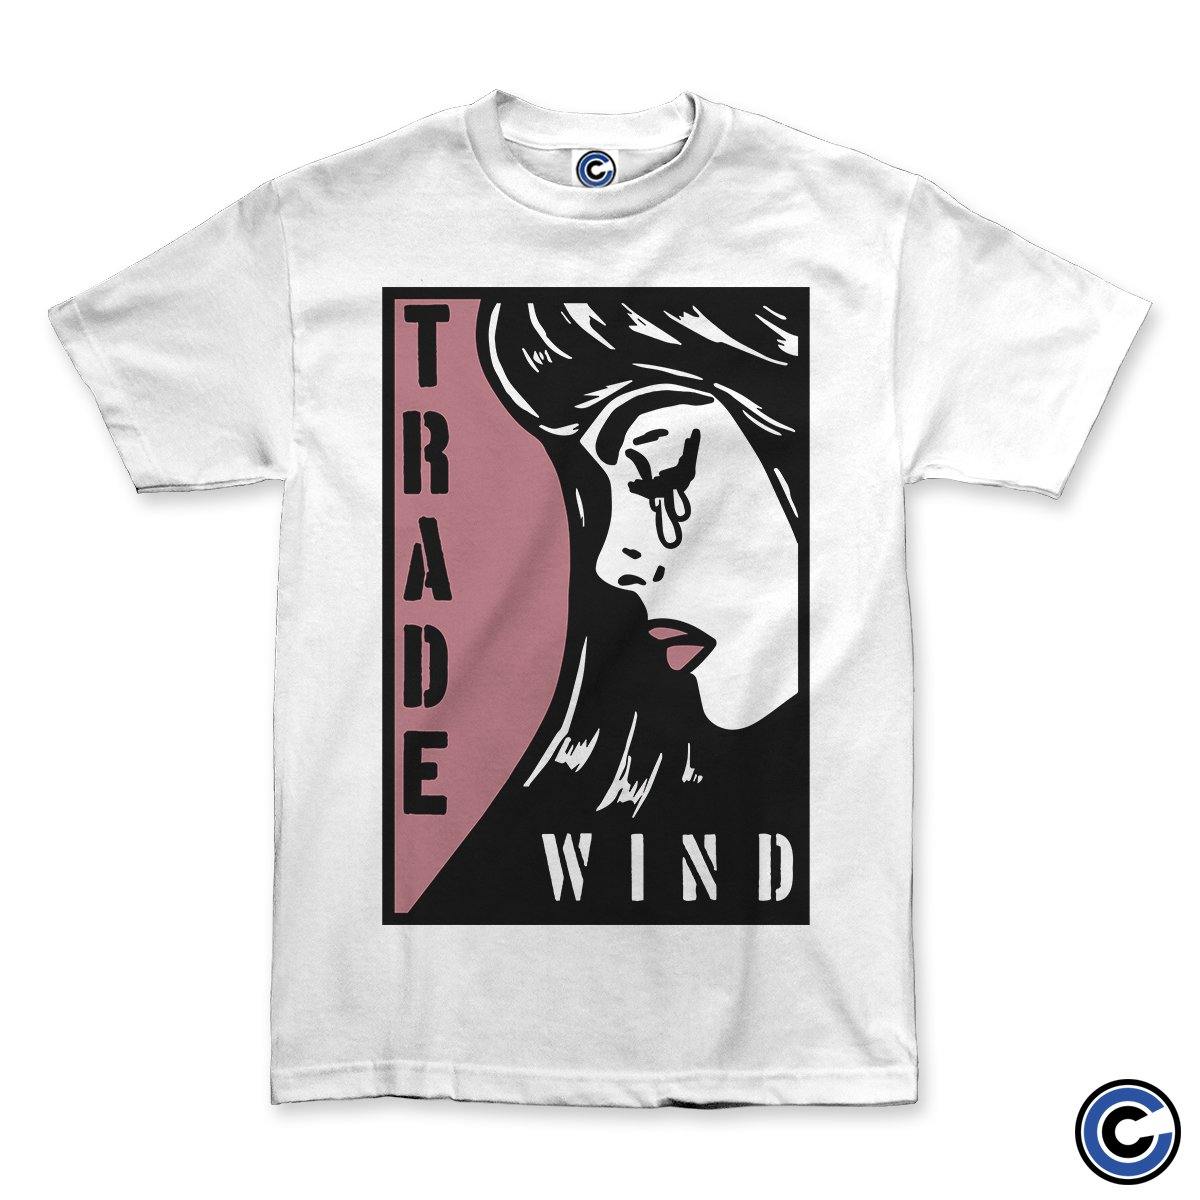 Buy – Trade Wind "Crying Girl" Shirt – Band & Music Merch – Cold Cuts Merch